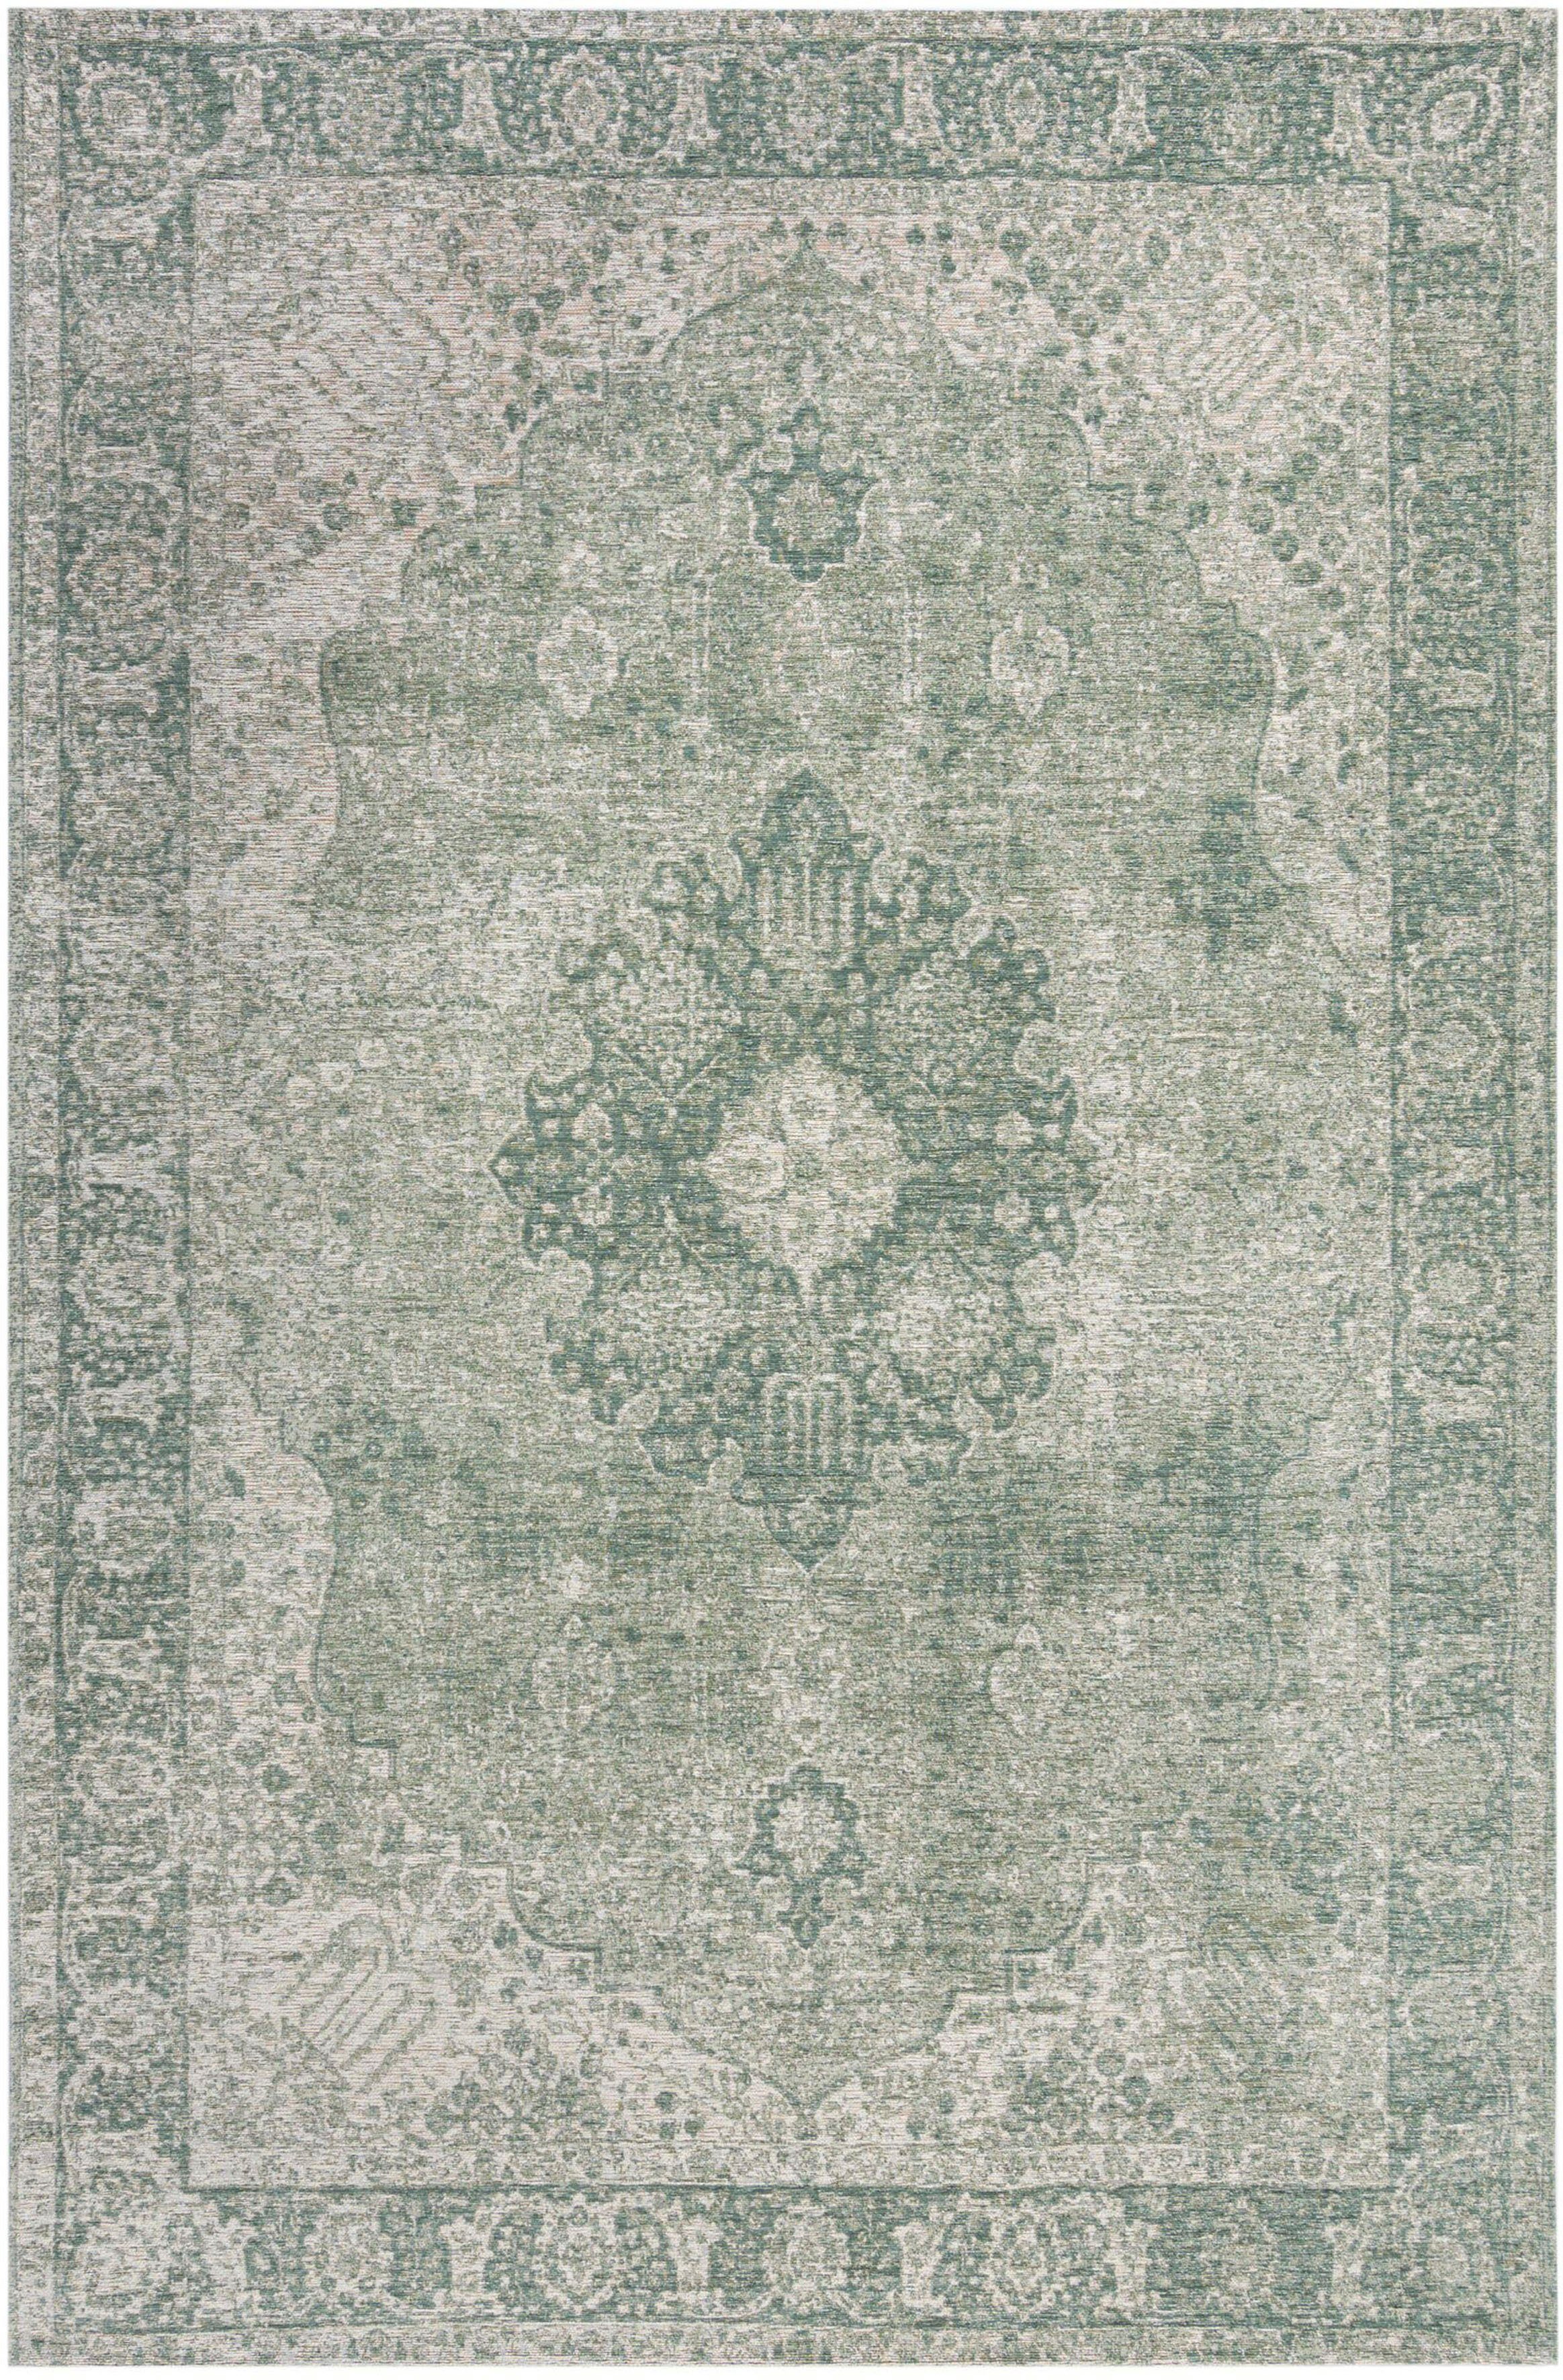 RUGS, grün Höhe: FLAIR mm, 4 Antique, Vintage-Muster Teppich rechteckig,